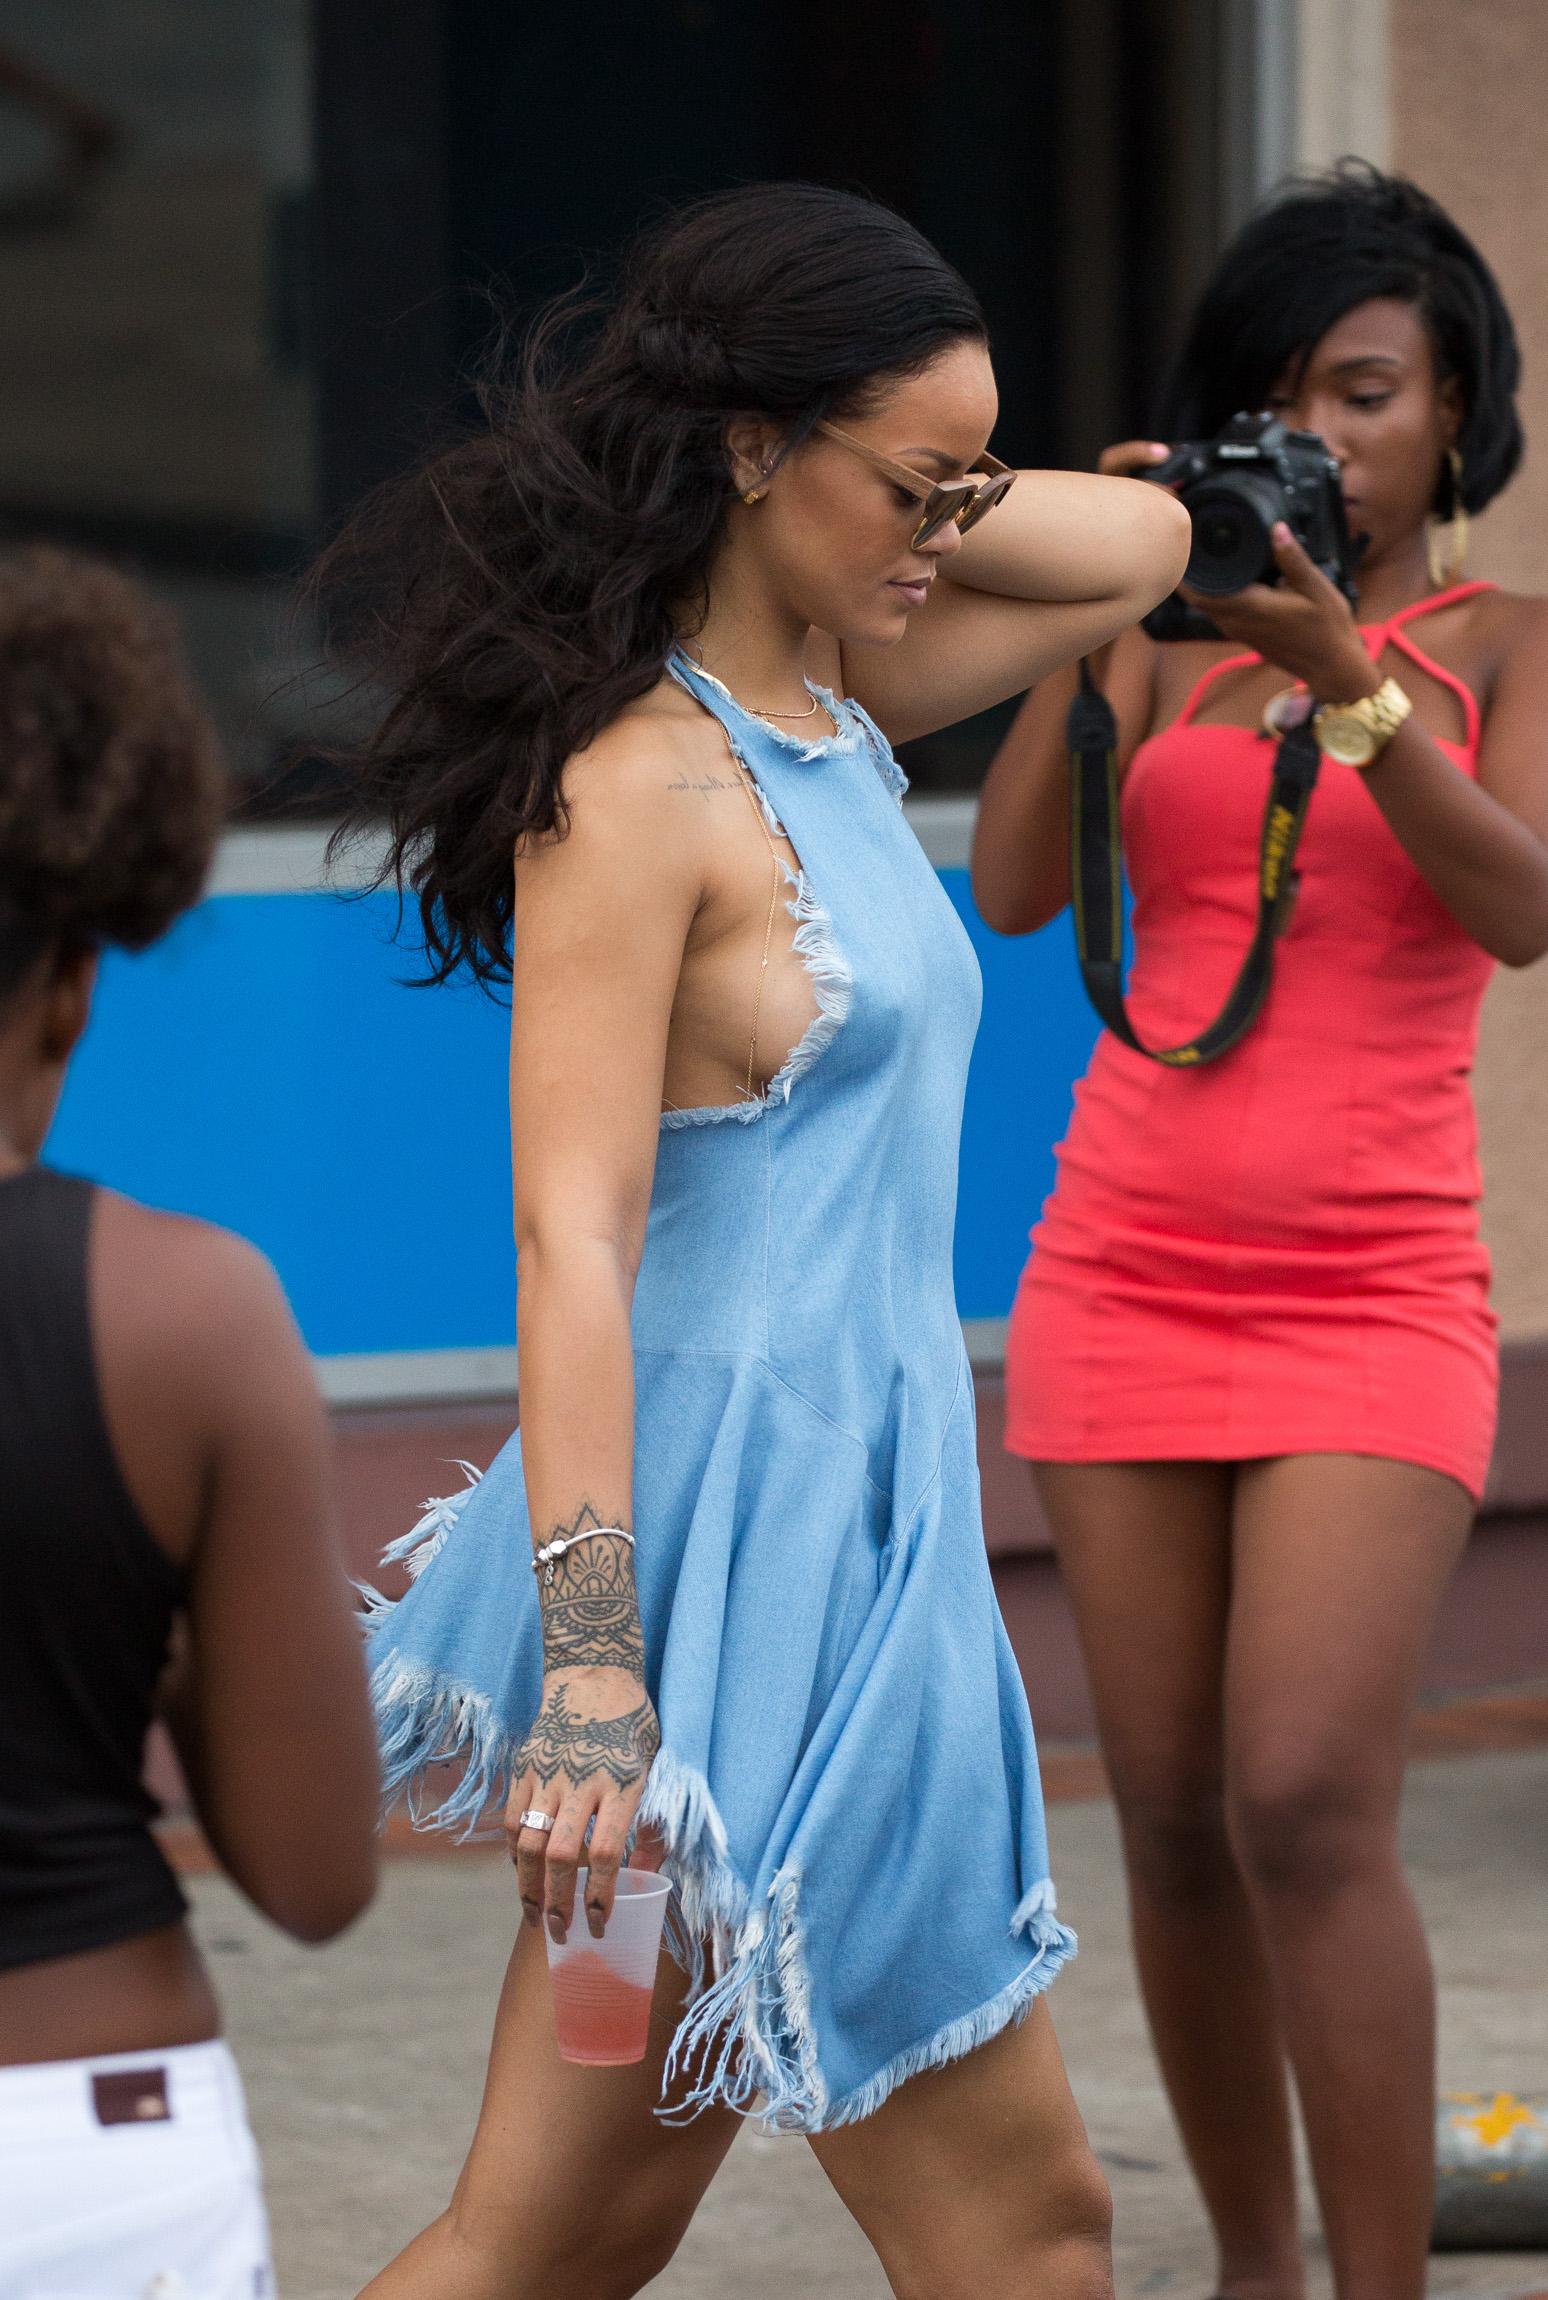 Rihanna Bares Serious Side Boob in Denim Ensemble